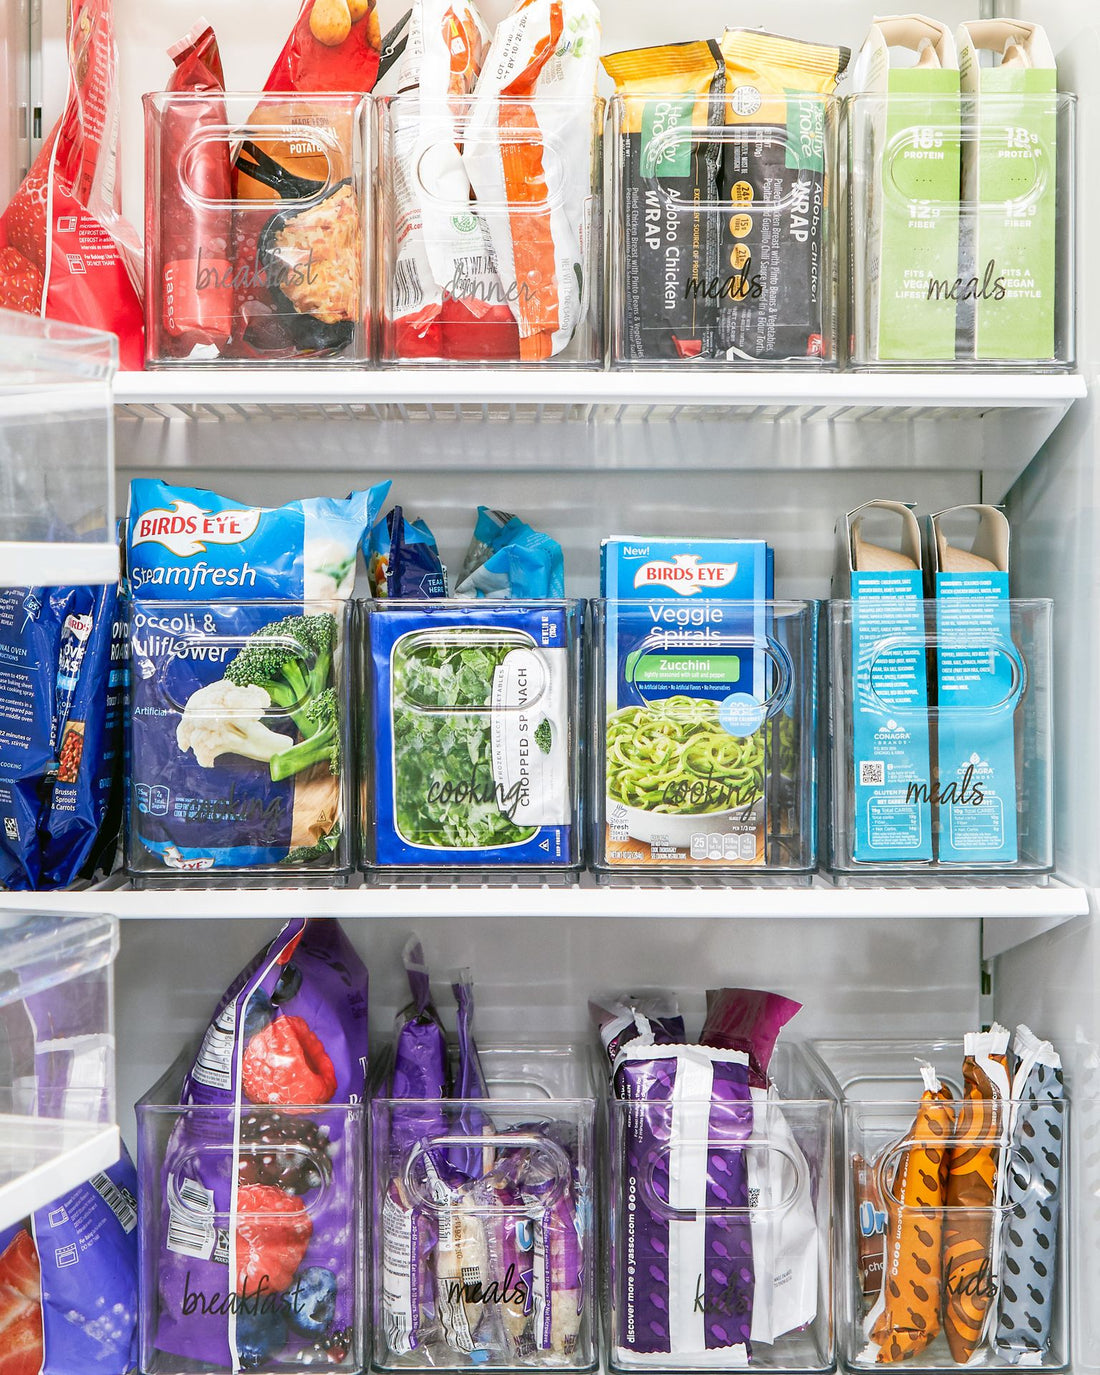 Cold Food Storage Guide: Shelf Lives, Organization, & More